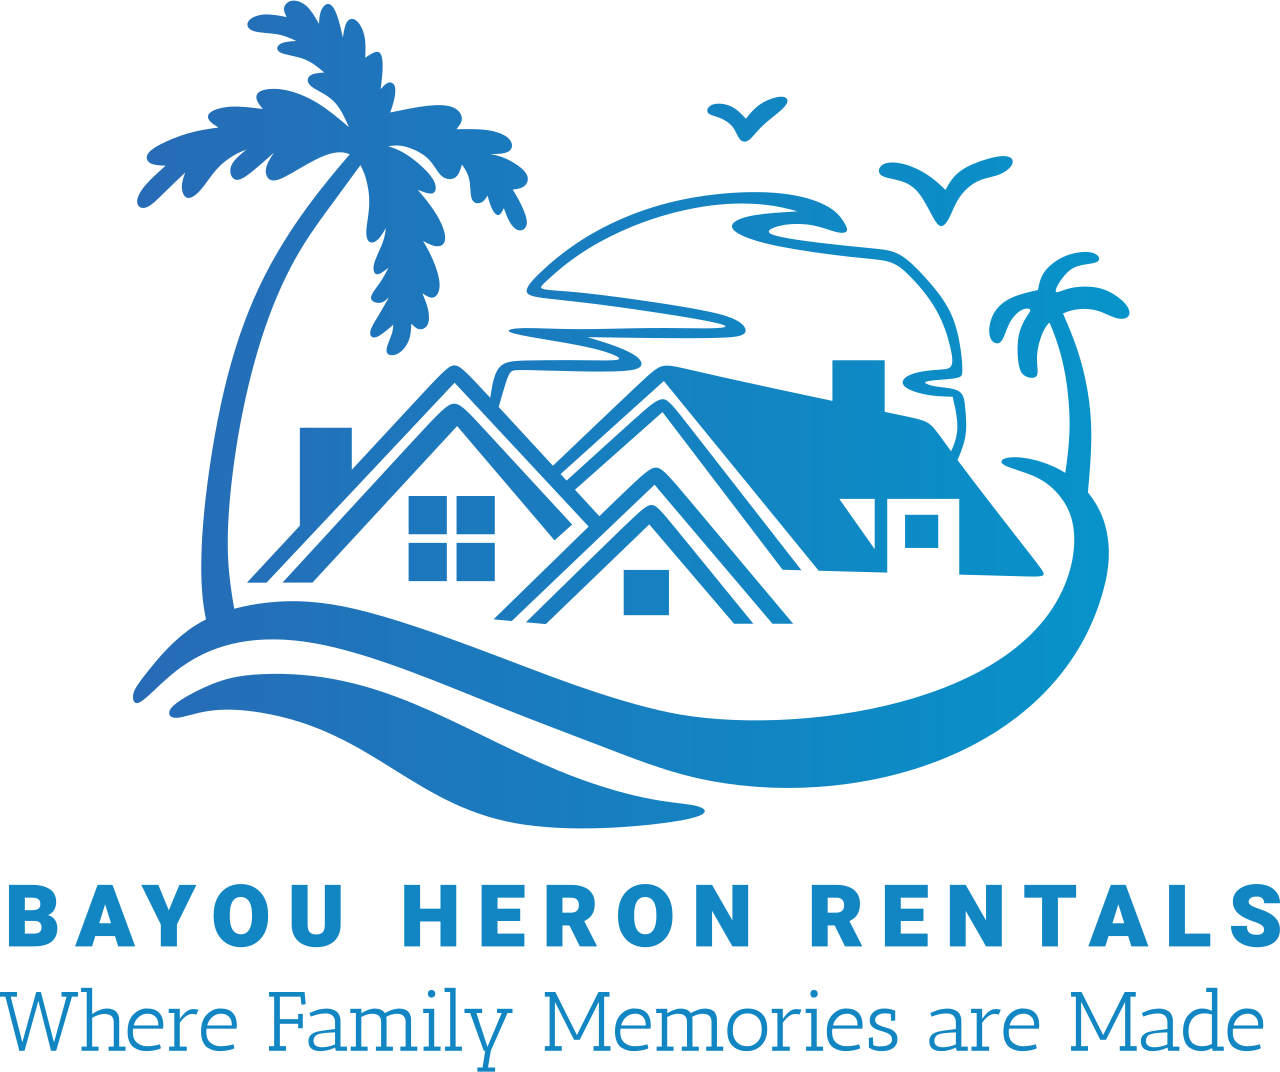 Bayou Heron Rentals's logo